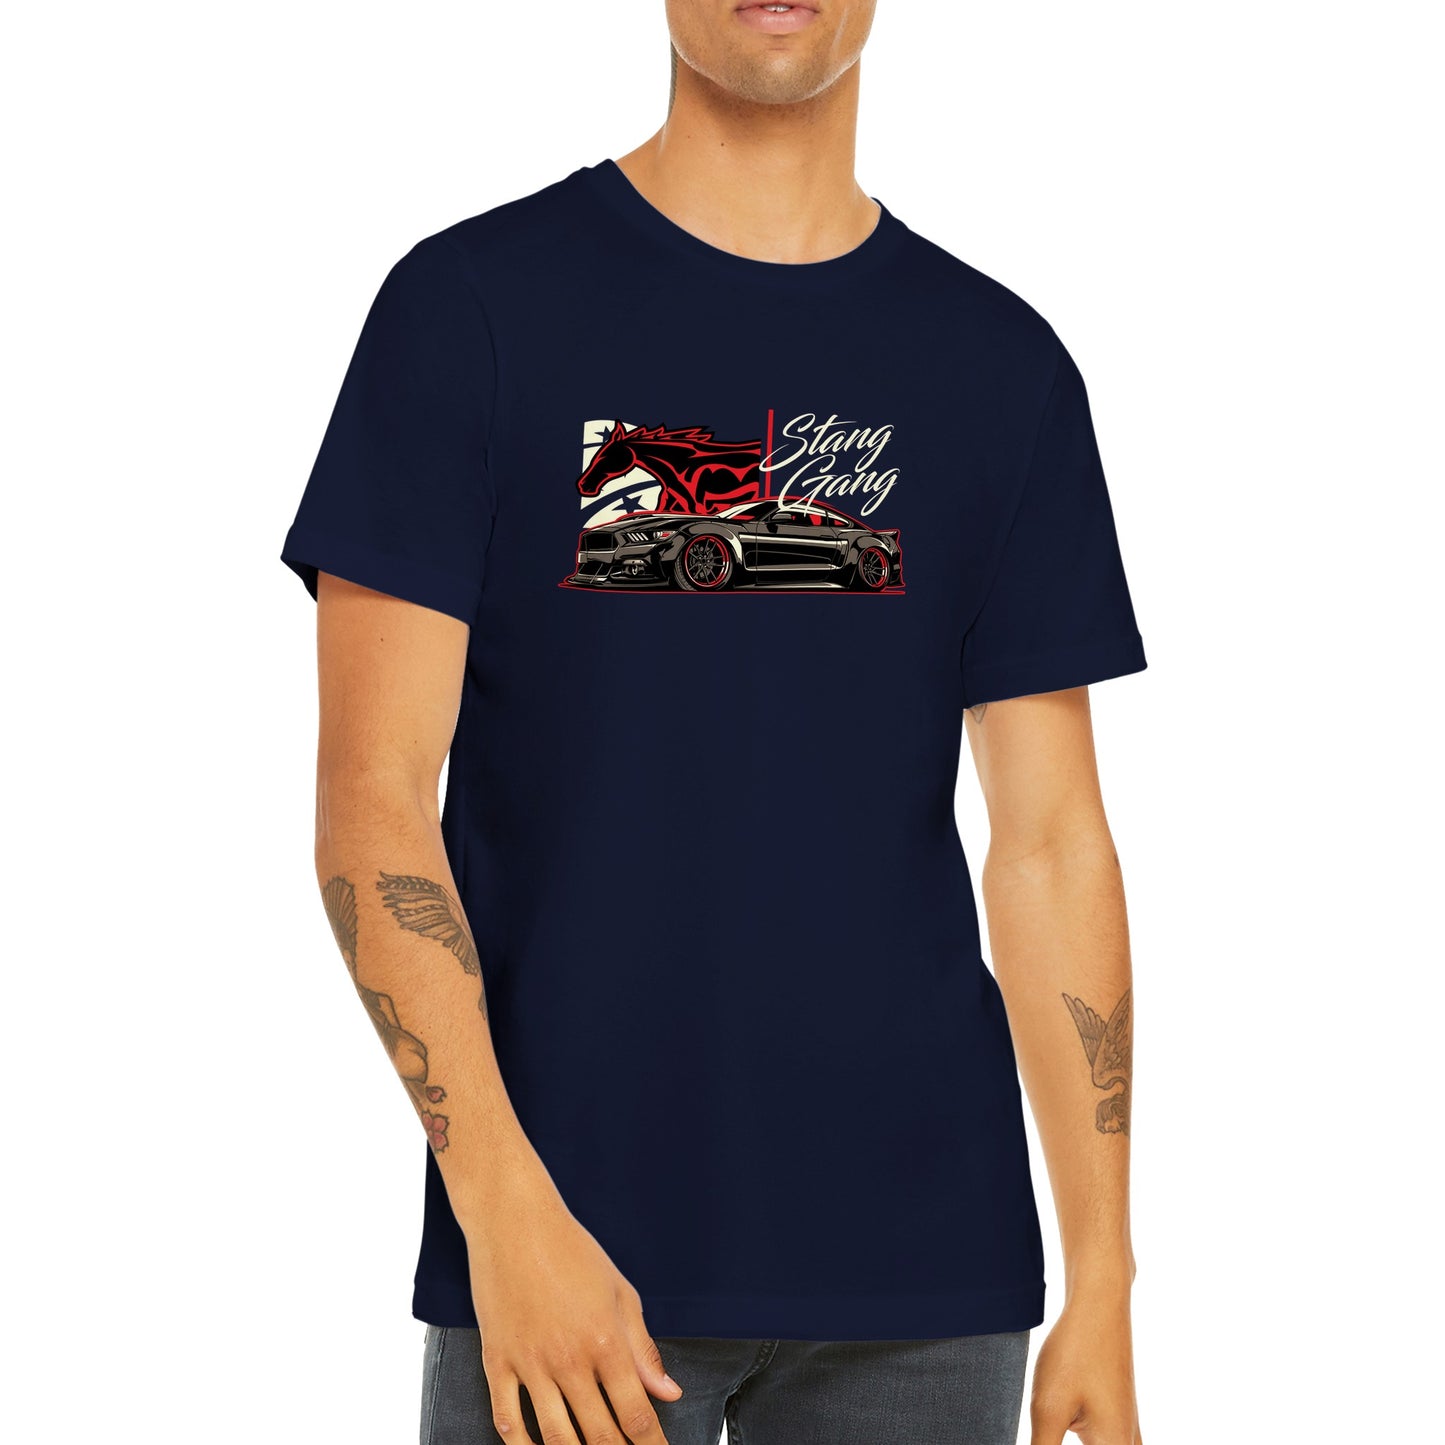 Car T-shirt - Mustang Artwork - Stang Gang - Premium Unisex T-shirt